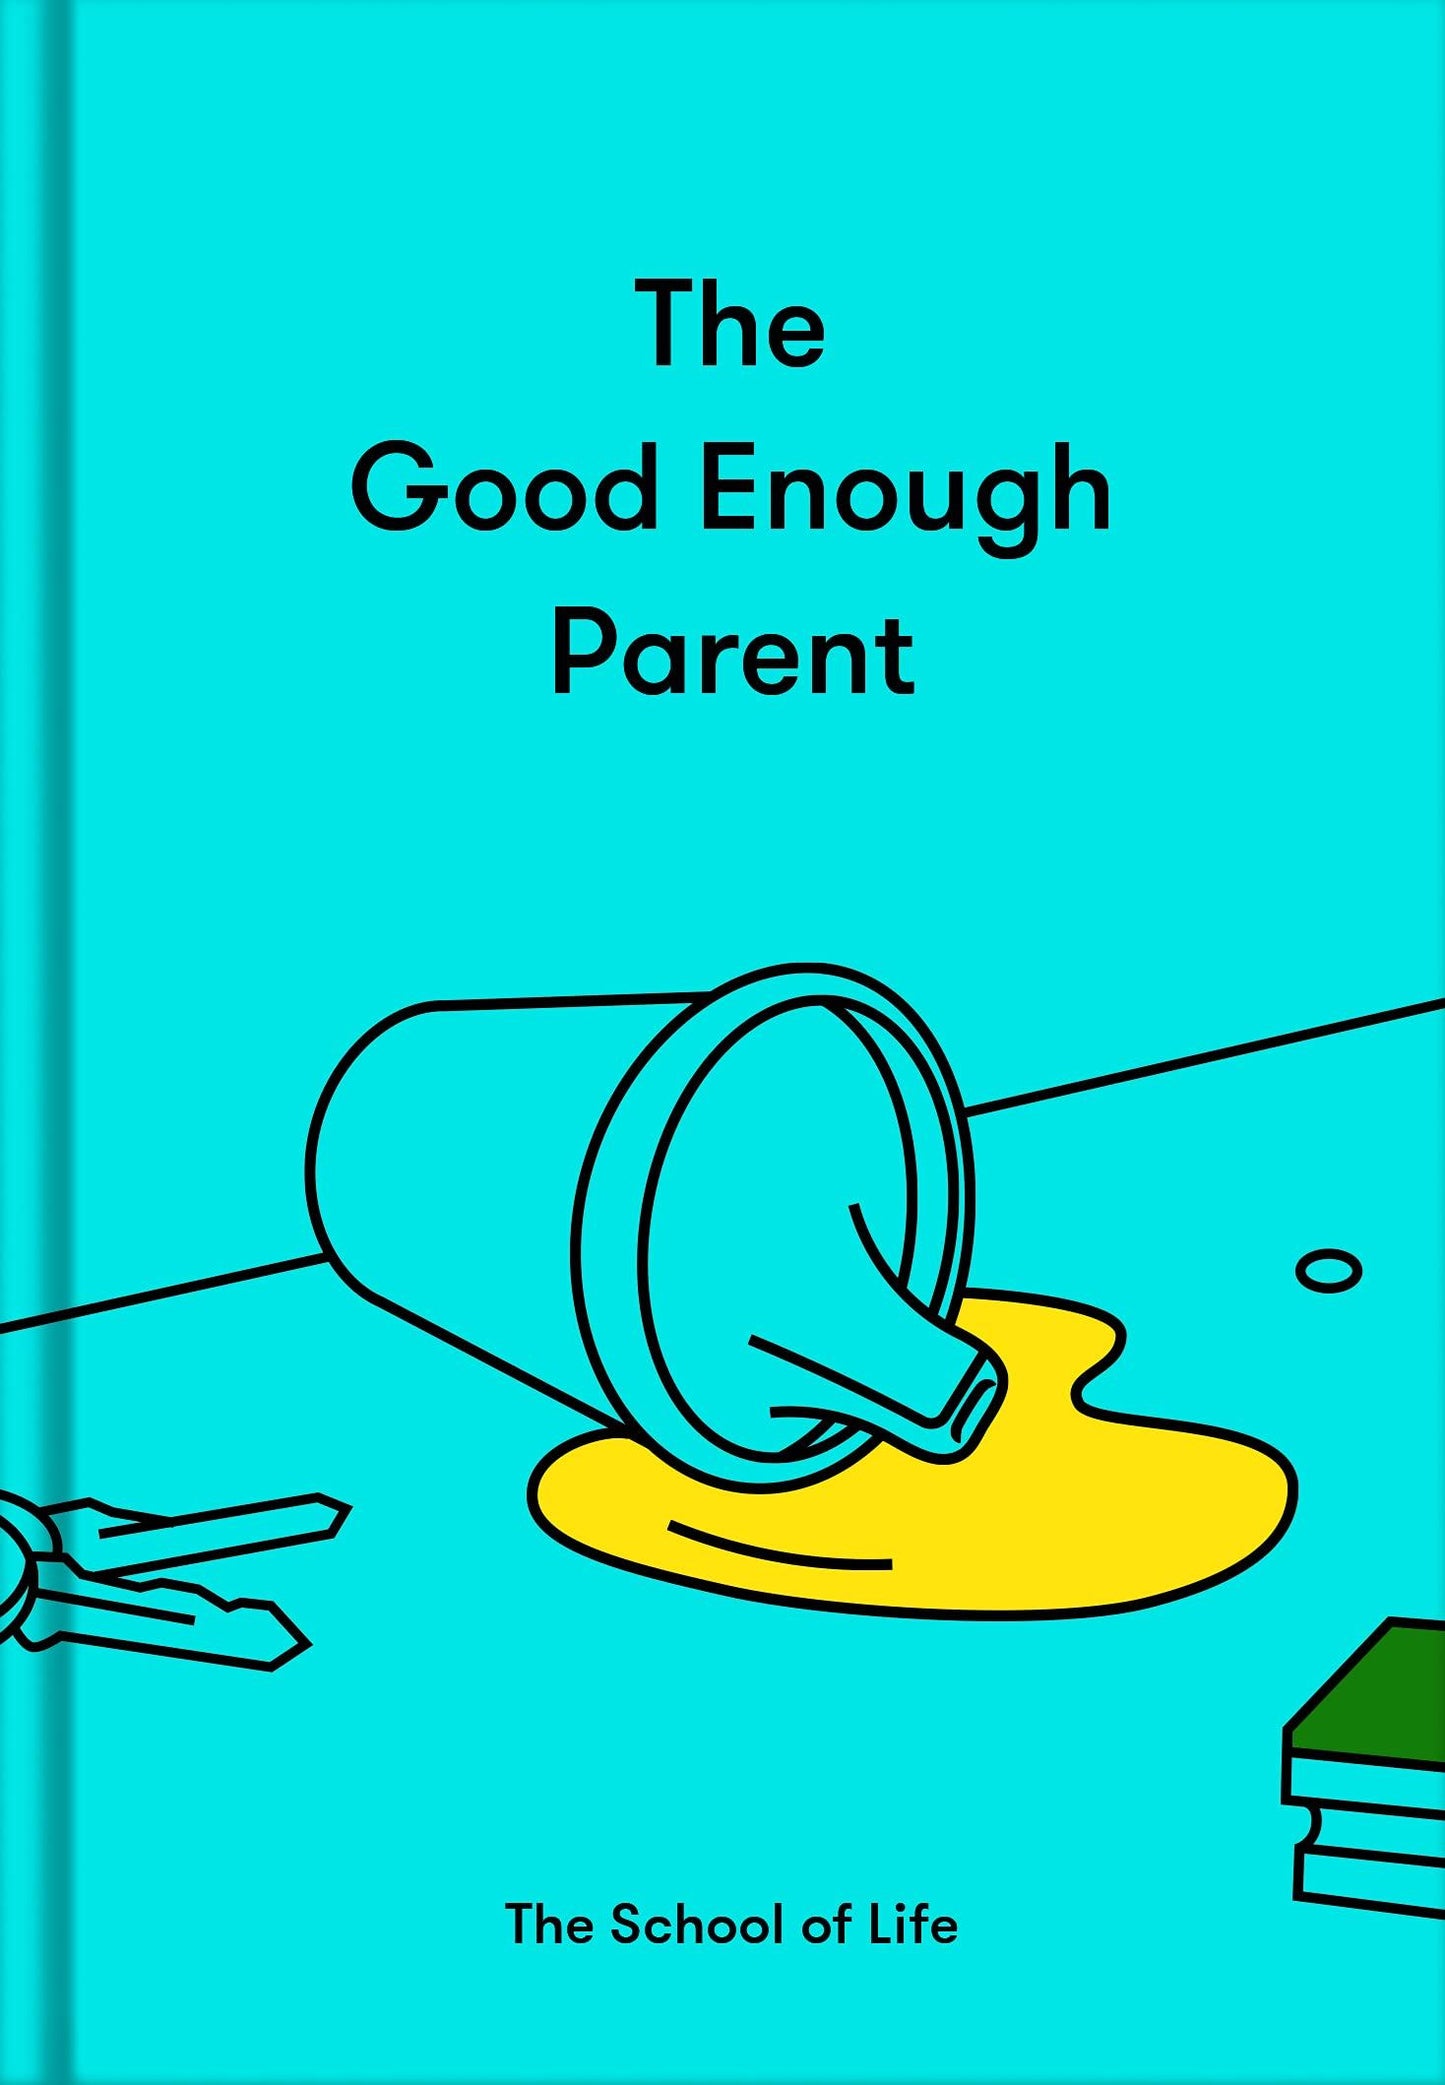 (School of Life) The Good Enough Parent